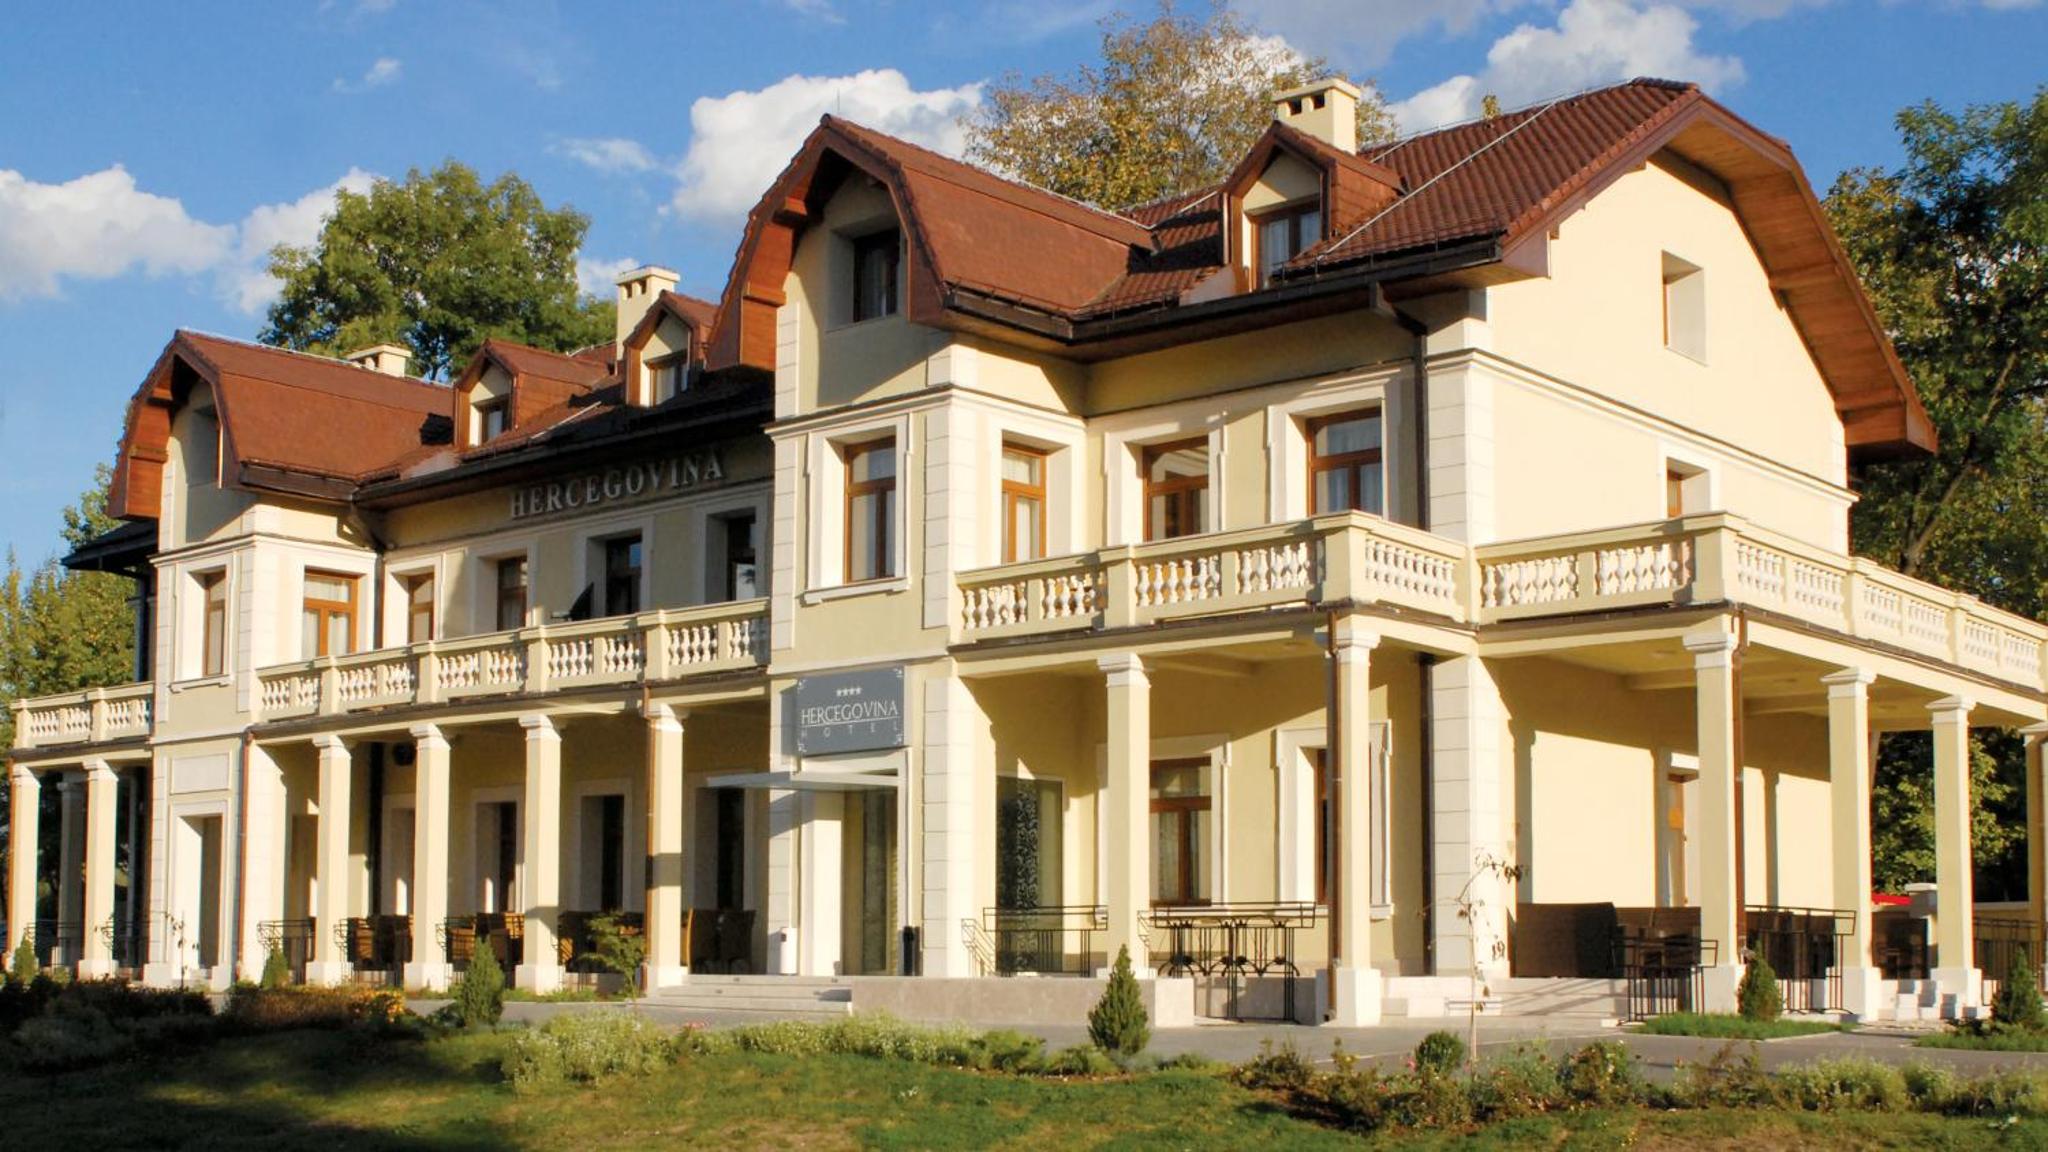 Herzegovina Hotel